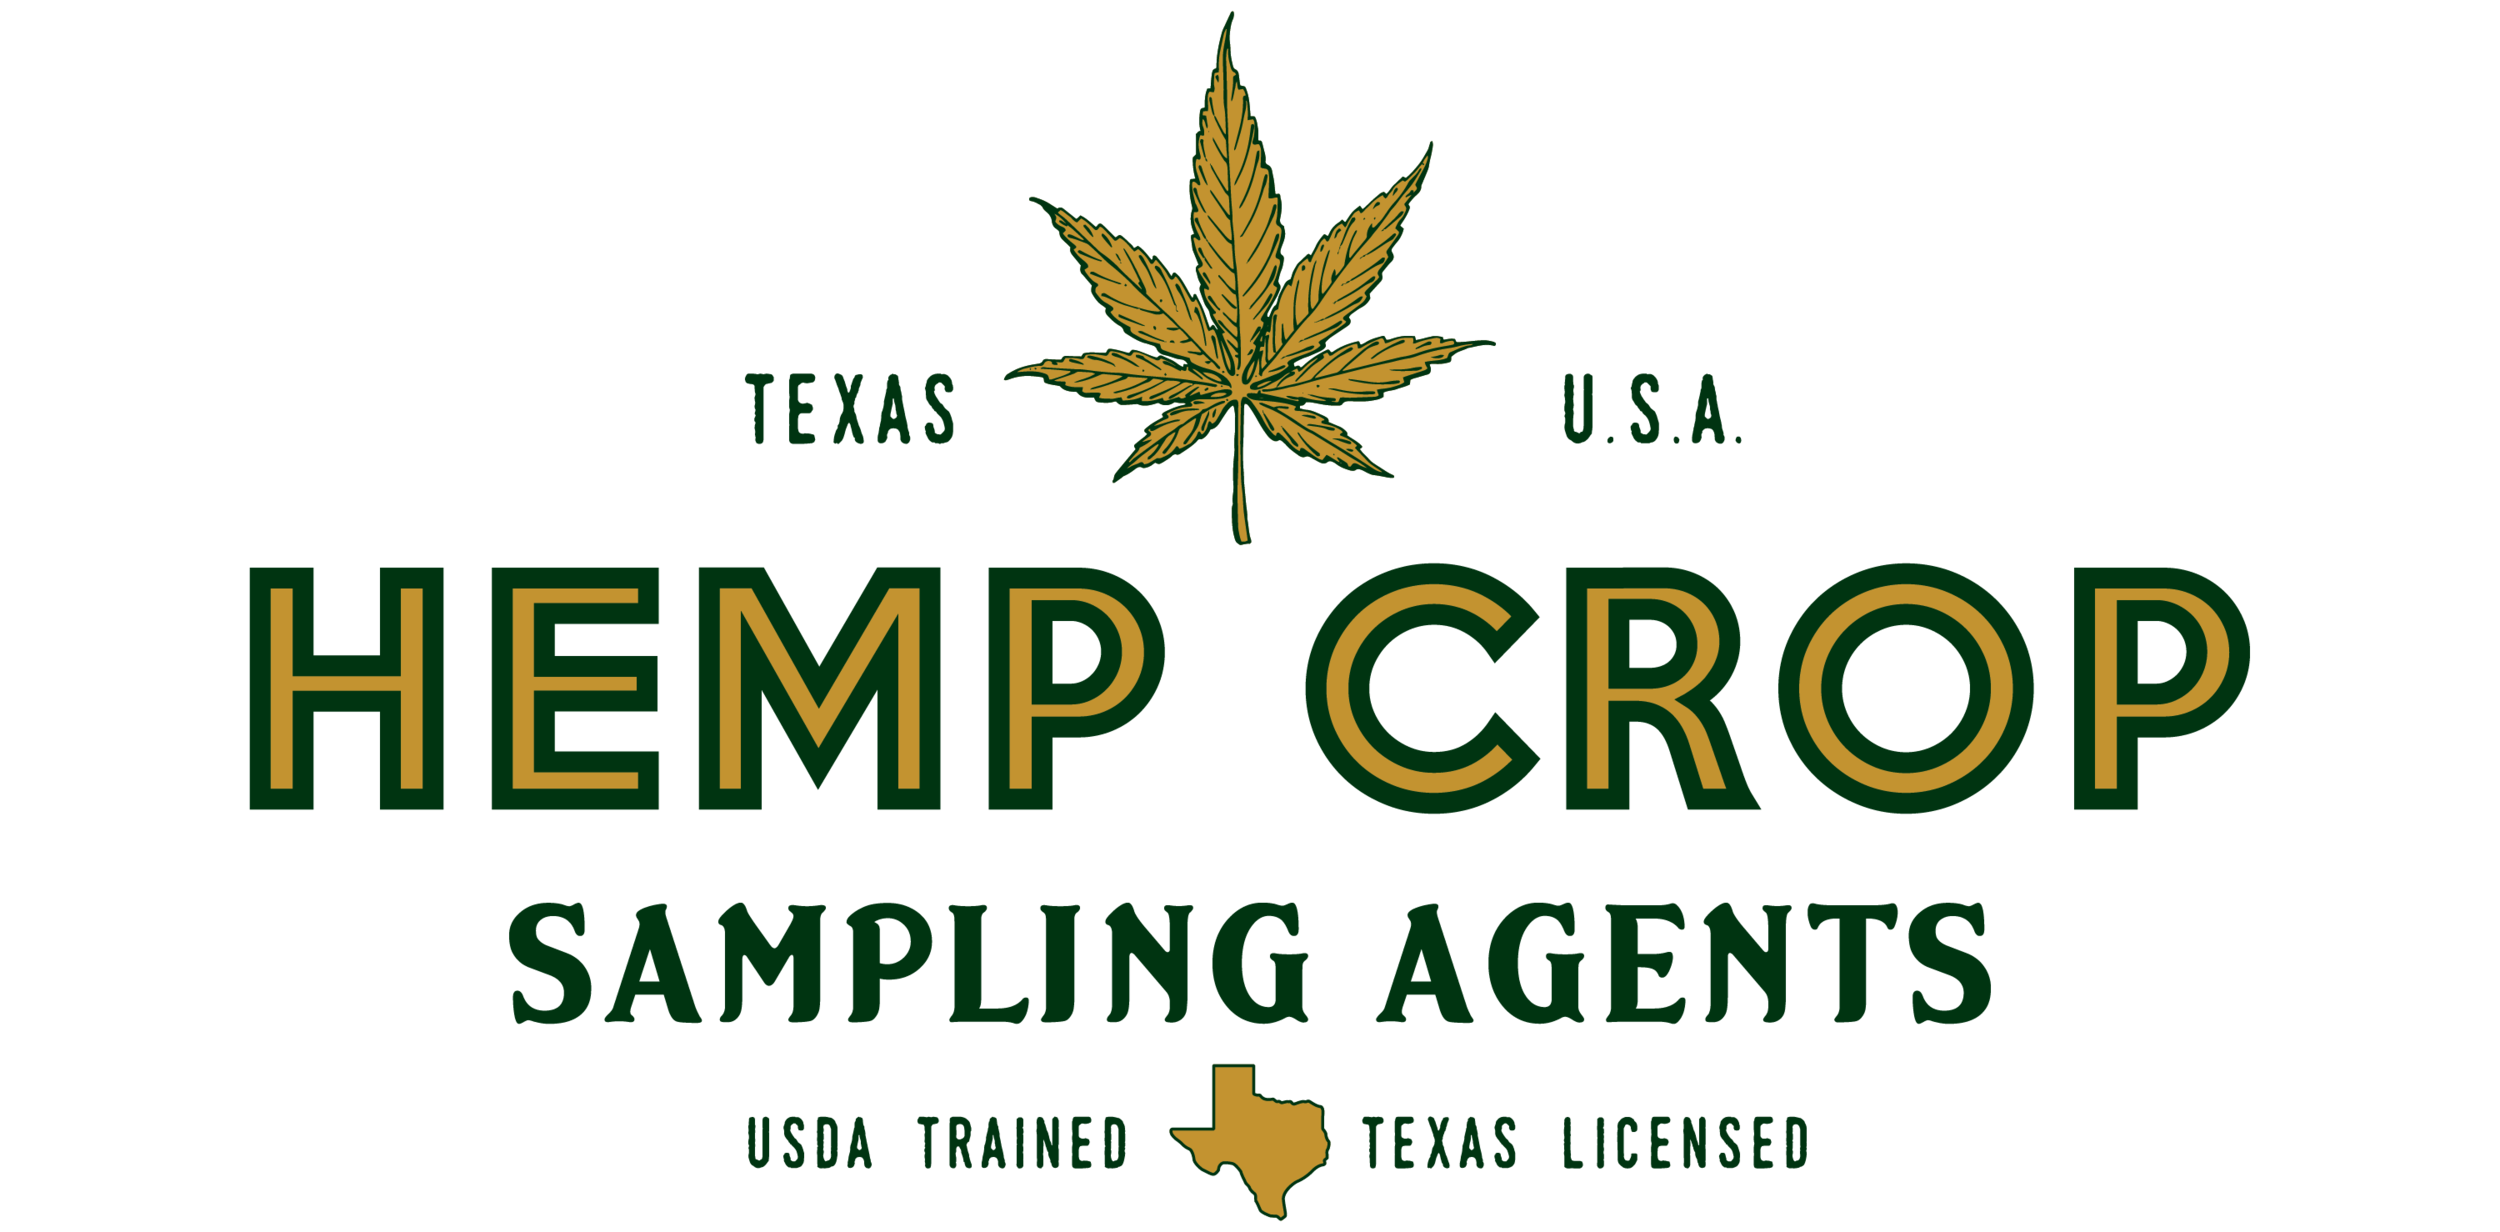 Texas | Hemp Crop Sampling Agents